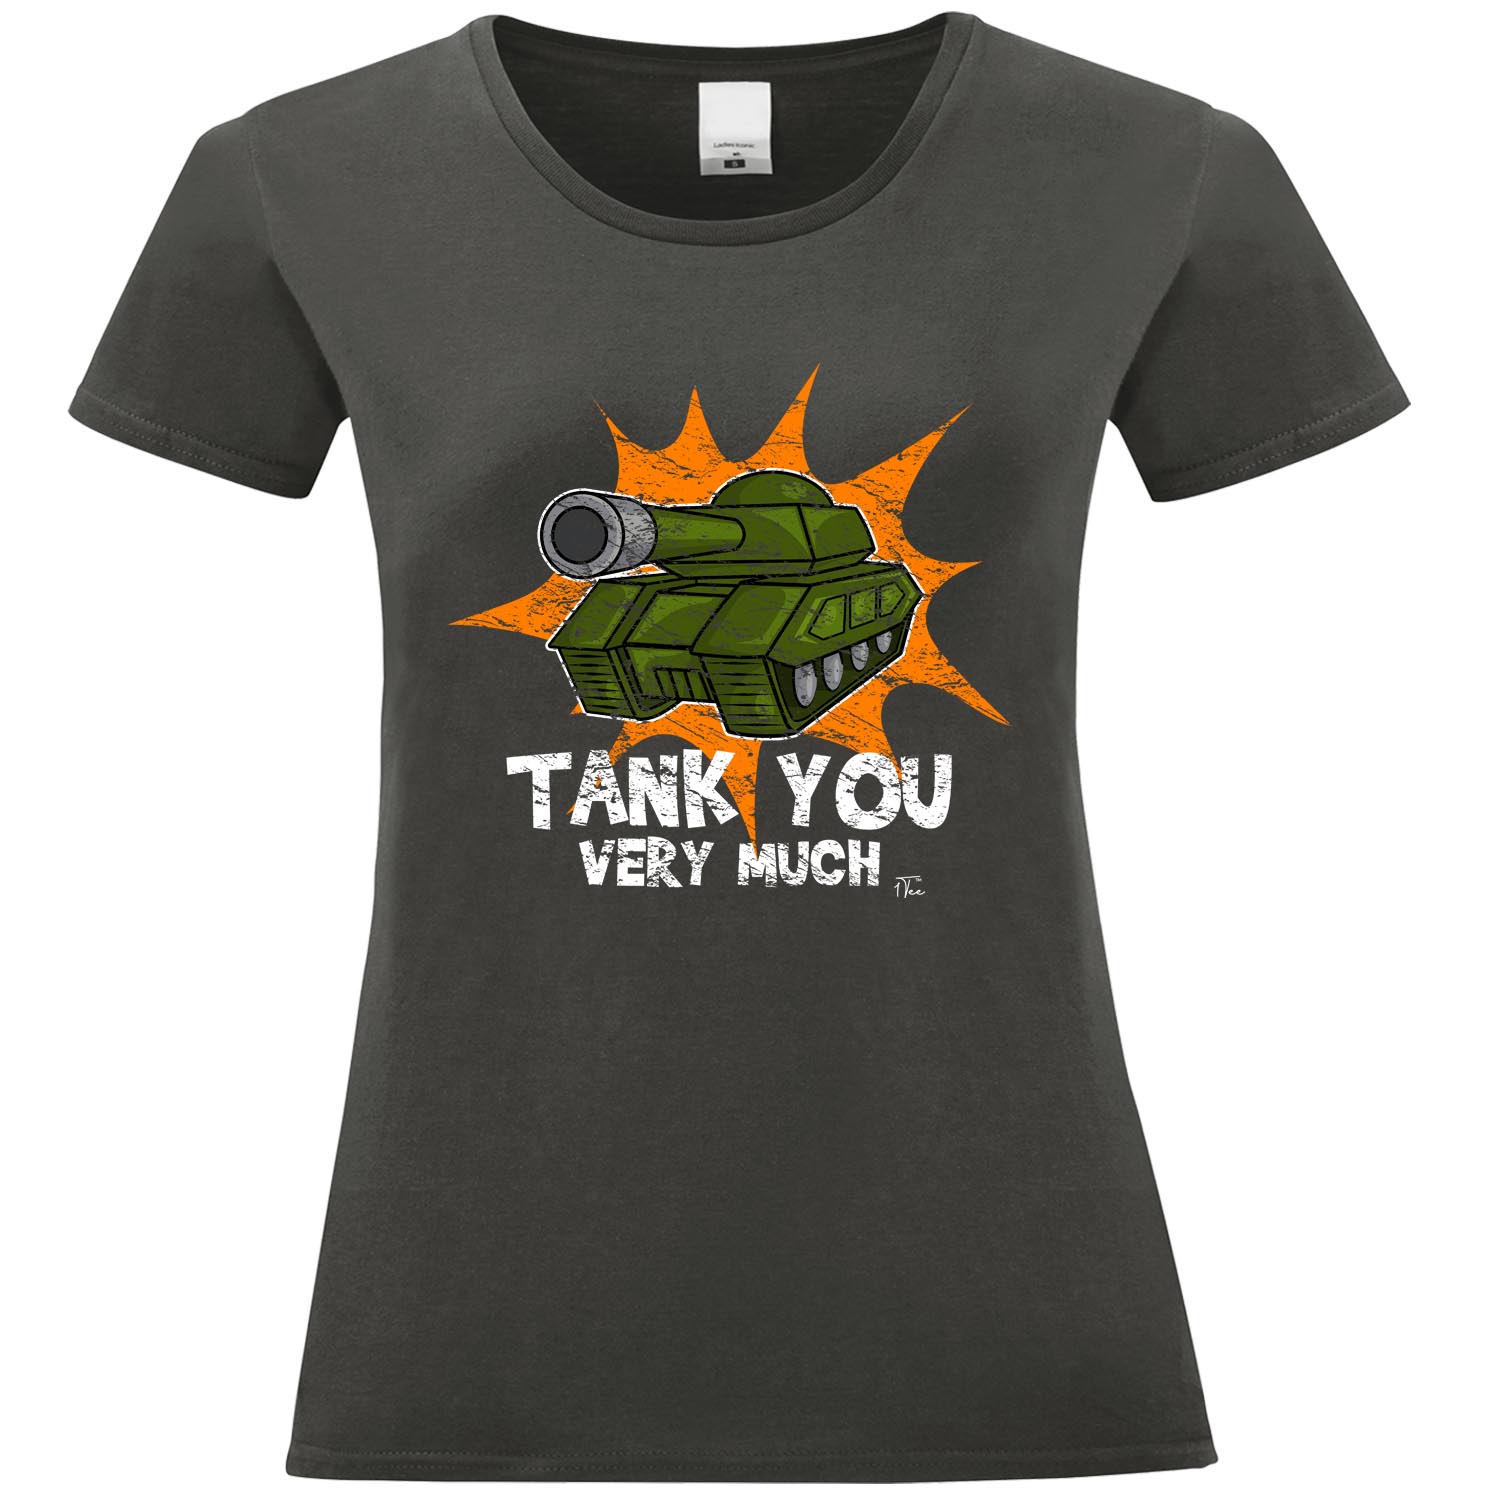 military tank t shirts